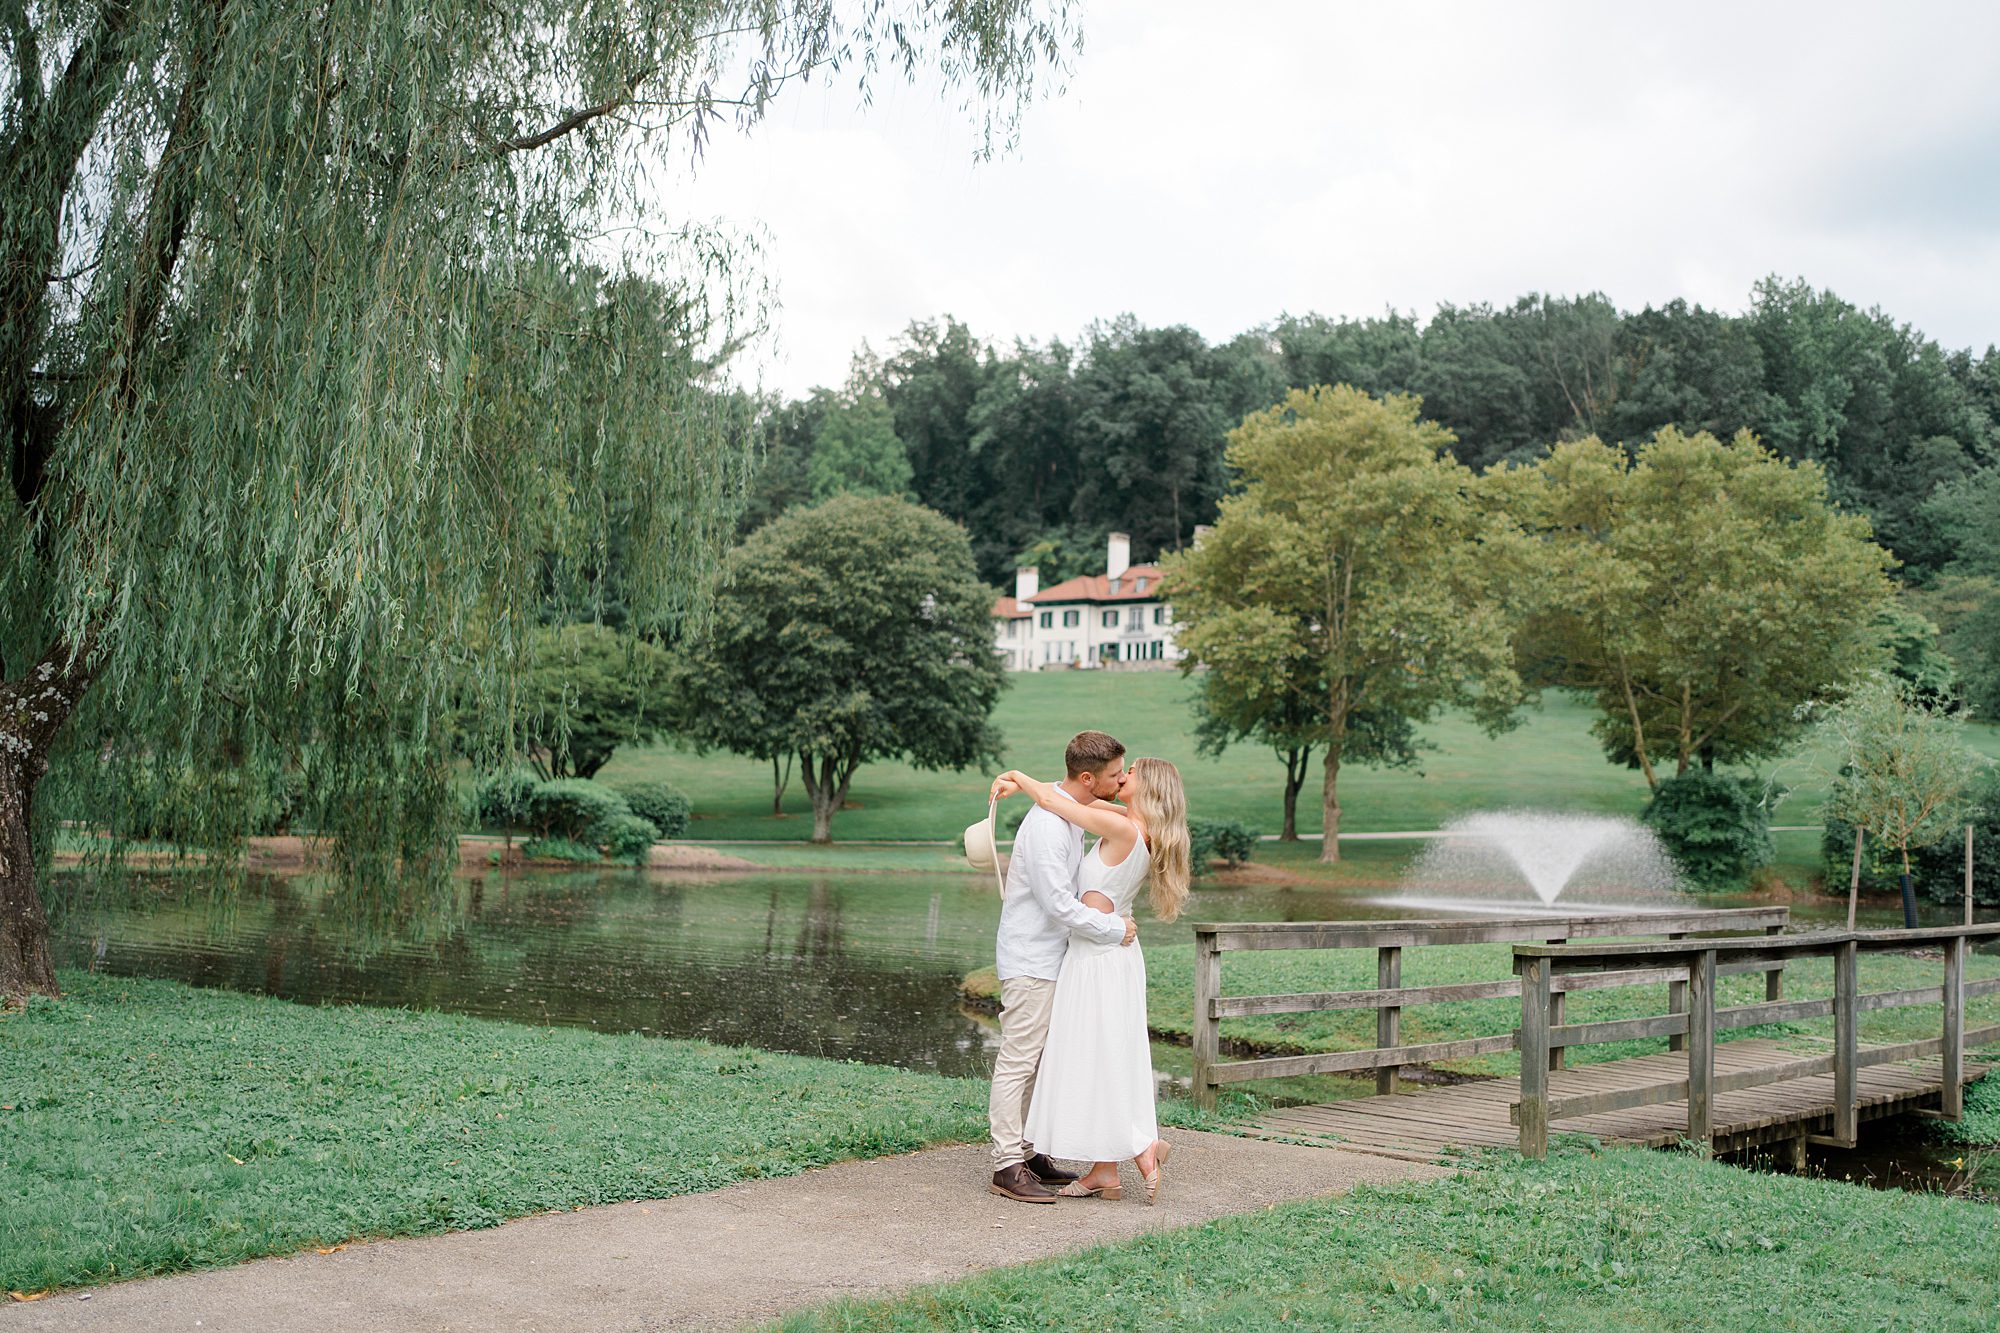 idyllic engagement photos in in Villanova, Pennsylvania at The Willows